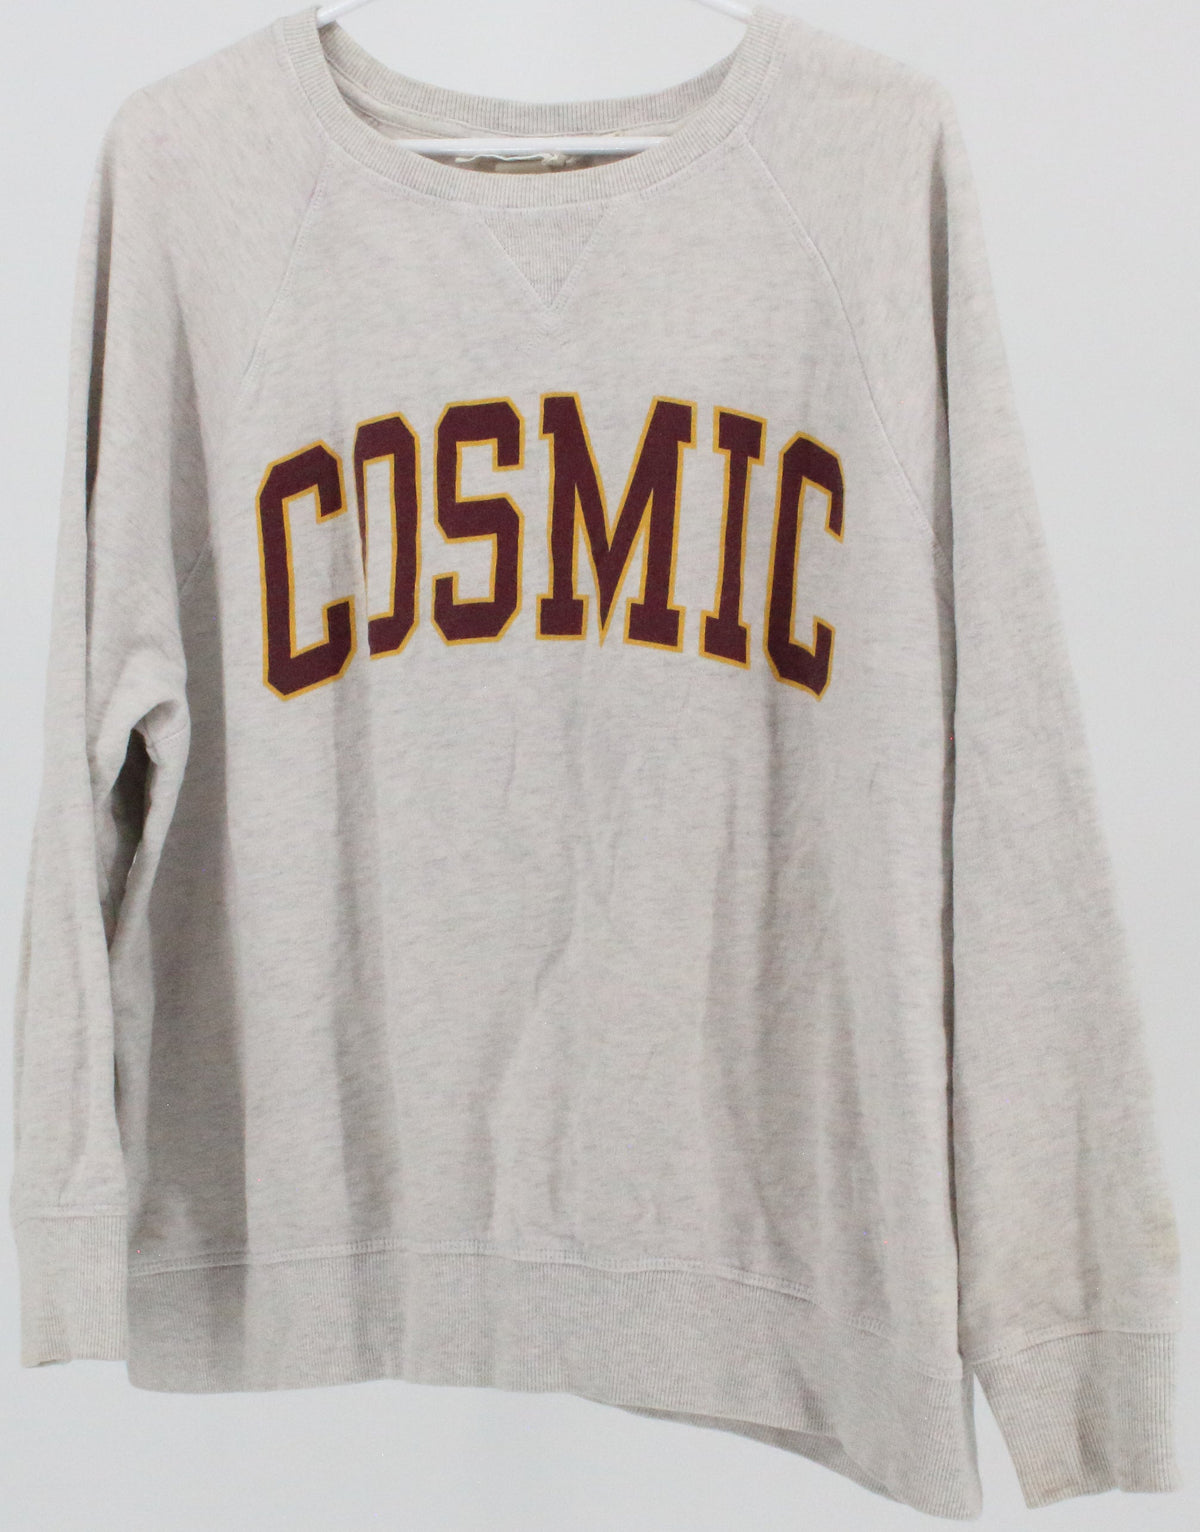 H&M L.O.G.G. Cosmic Grey Melange Sweatshirt